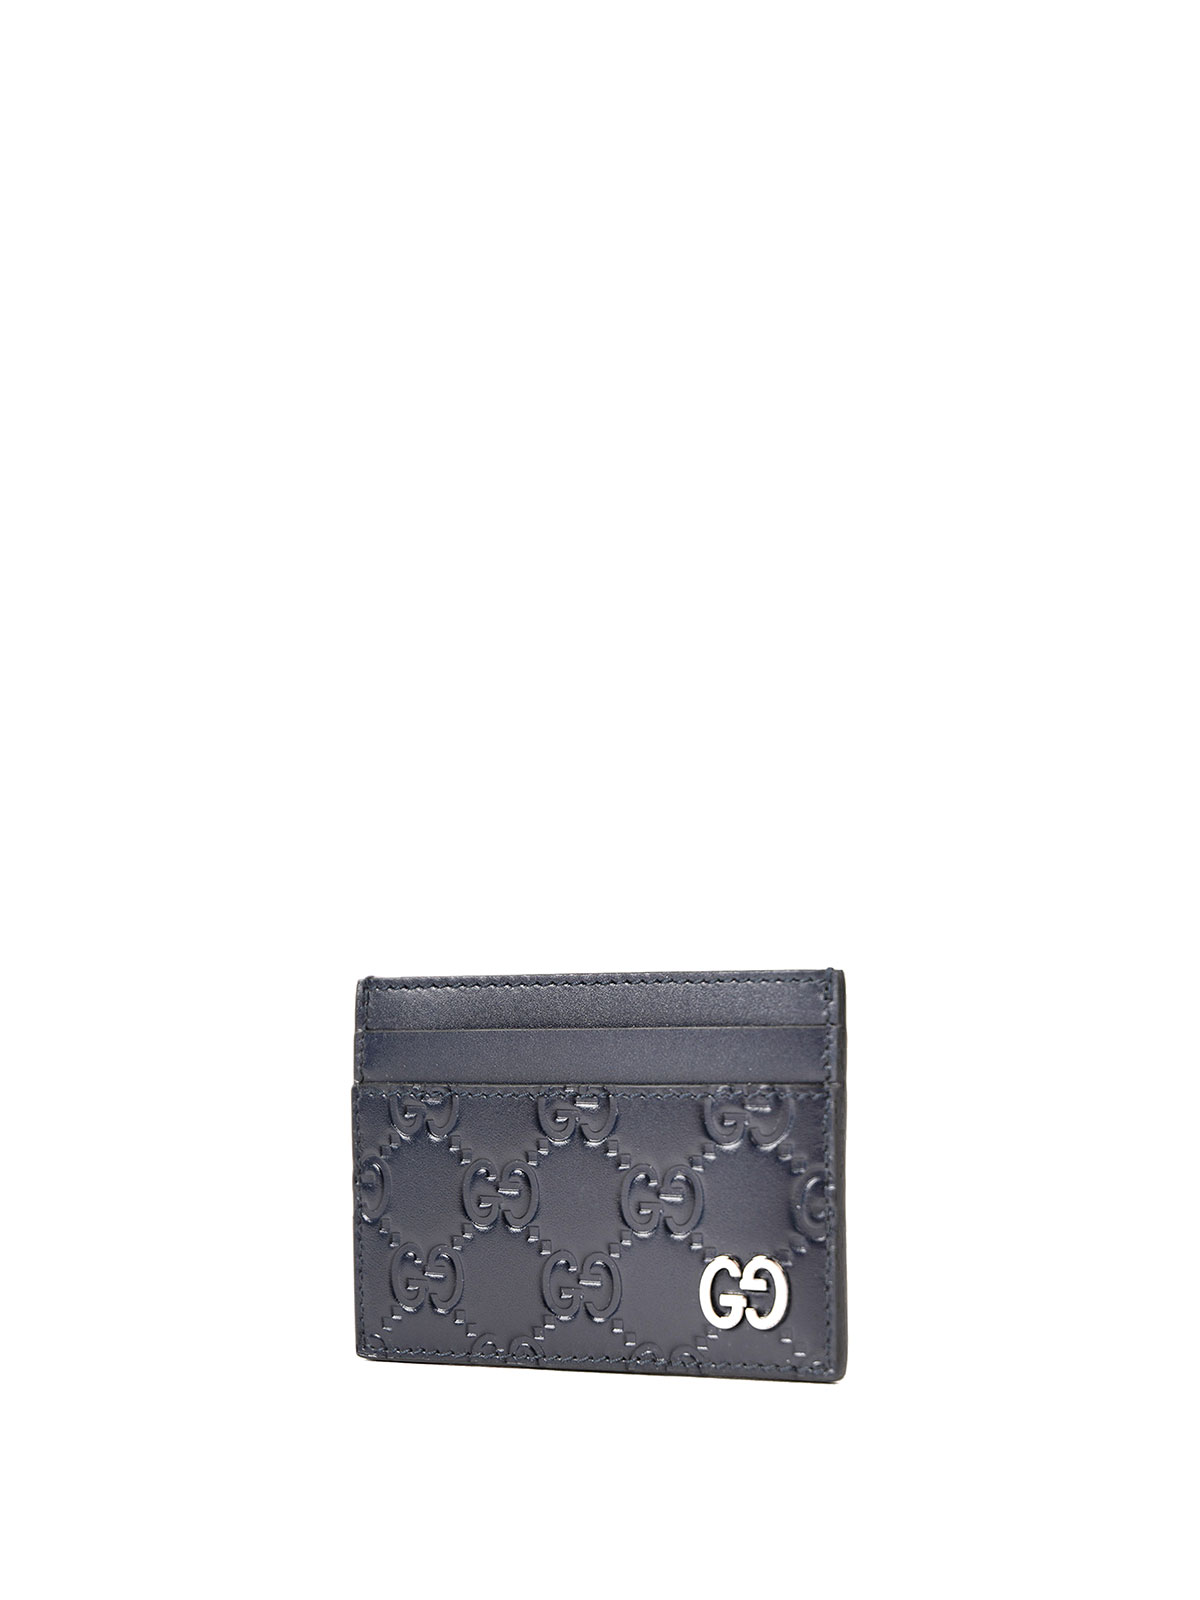 Buy Online Gucci Gray Phone Wallet Case